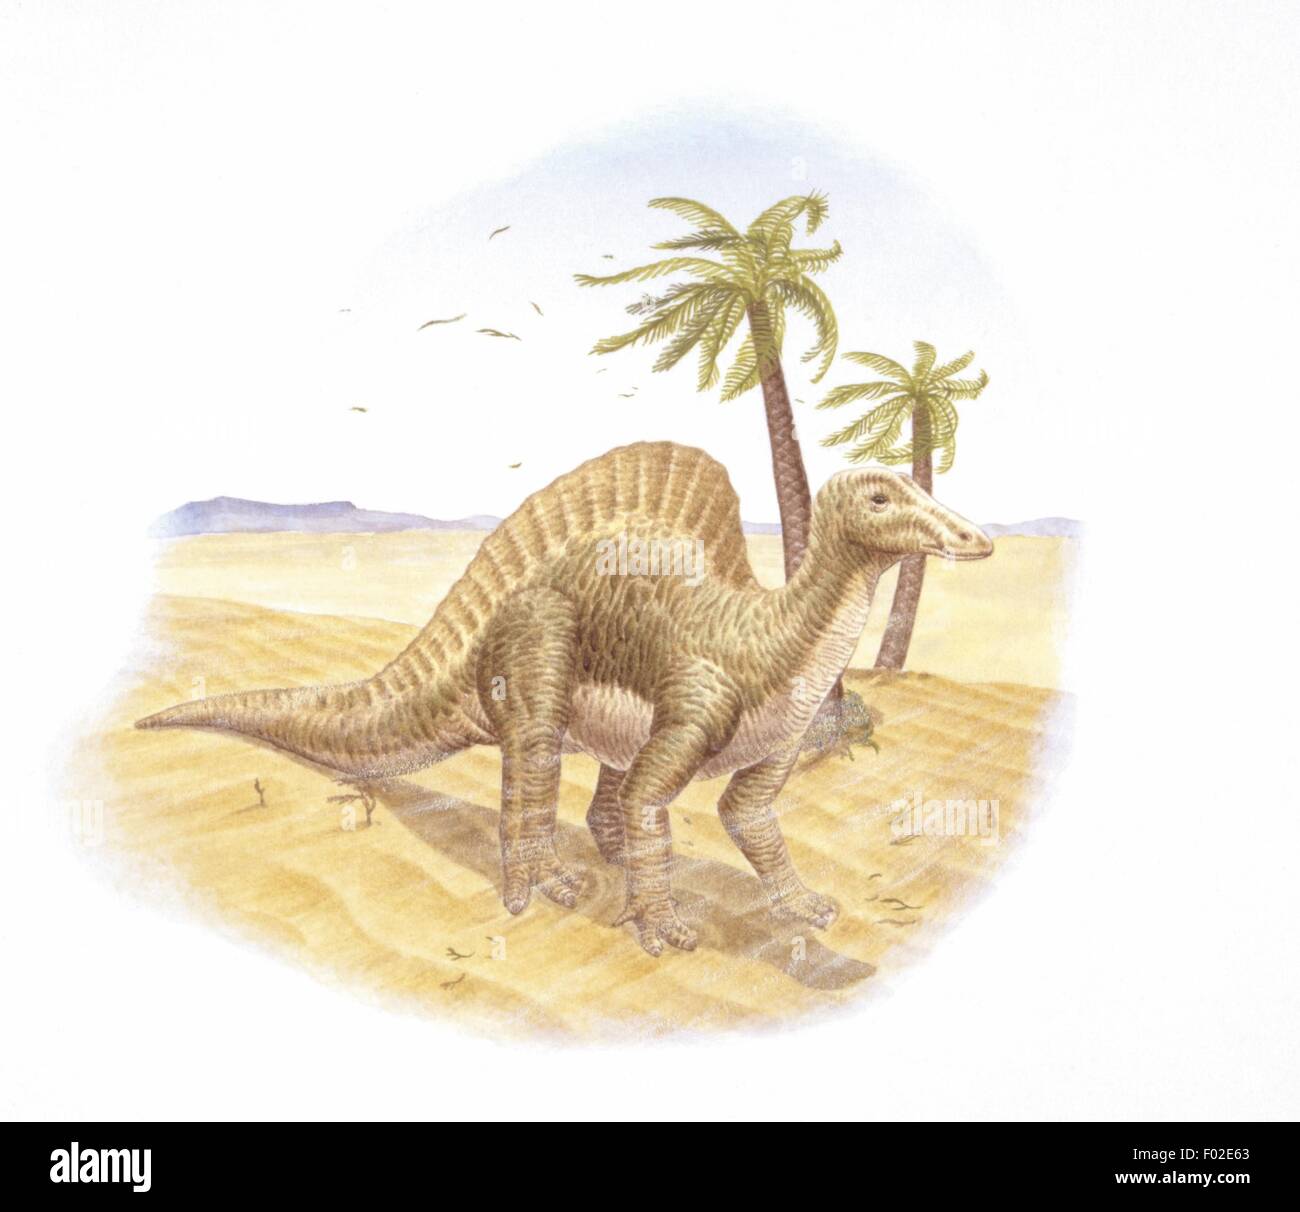 Palaeozoology - Cretaceous period - Dinosaurs - Ouranosaurus - Art work Stock Photo